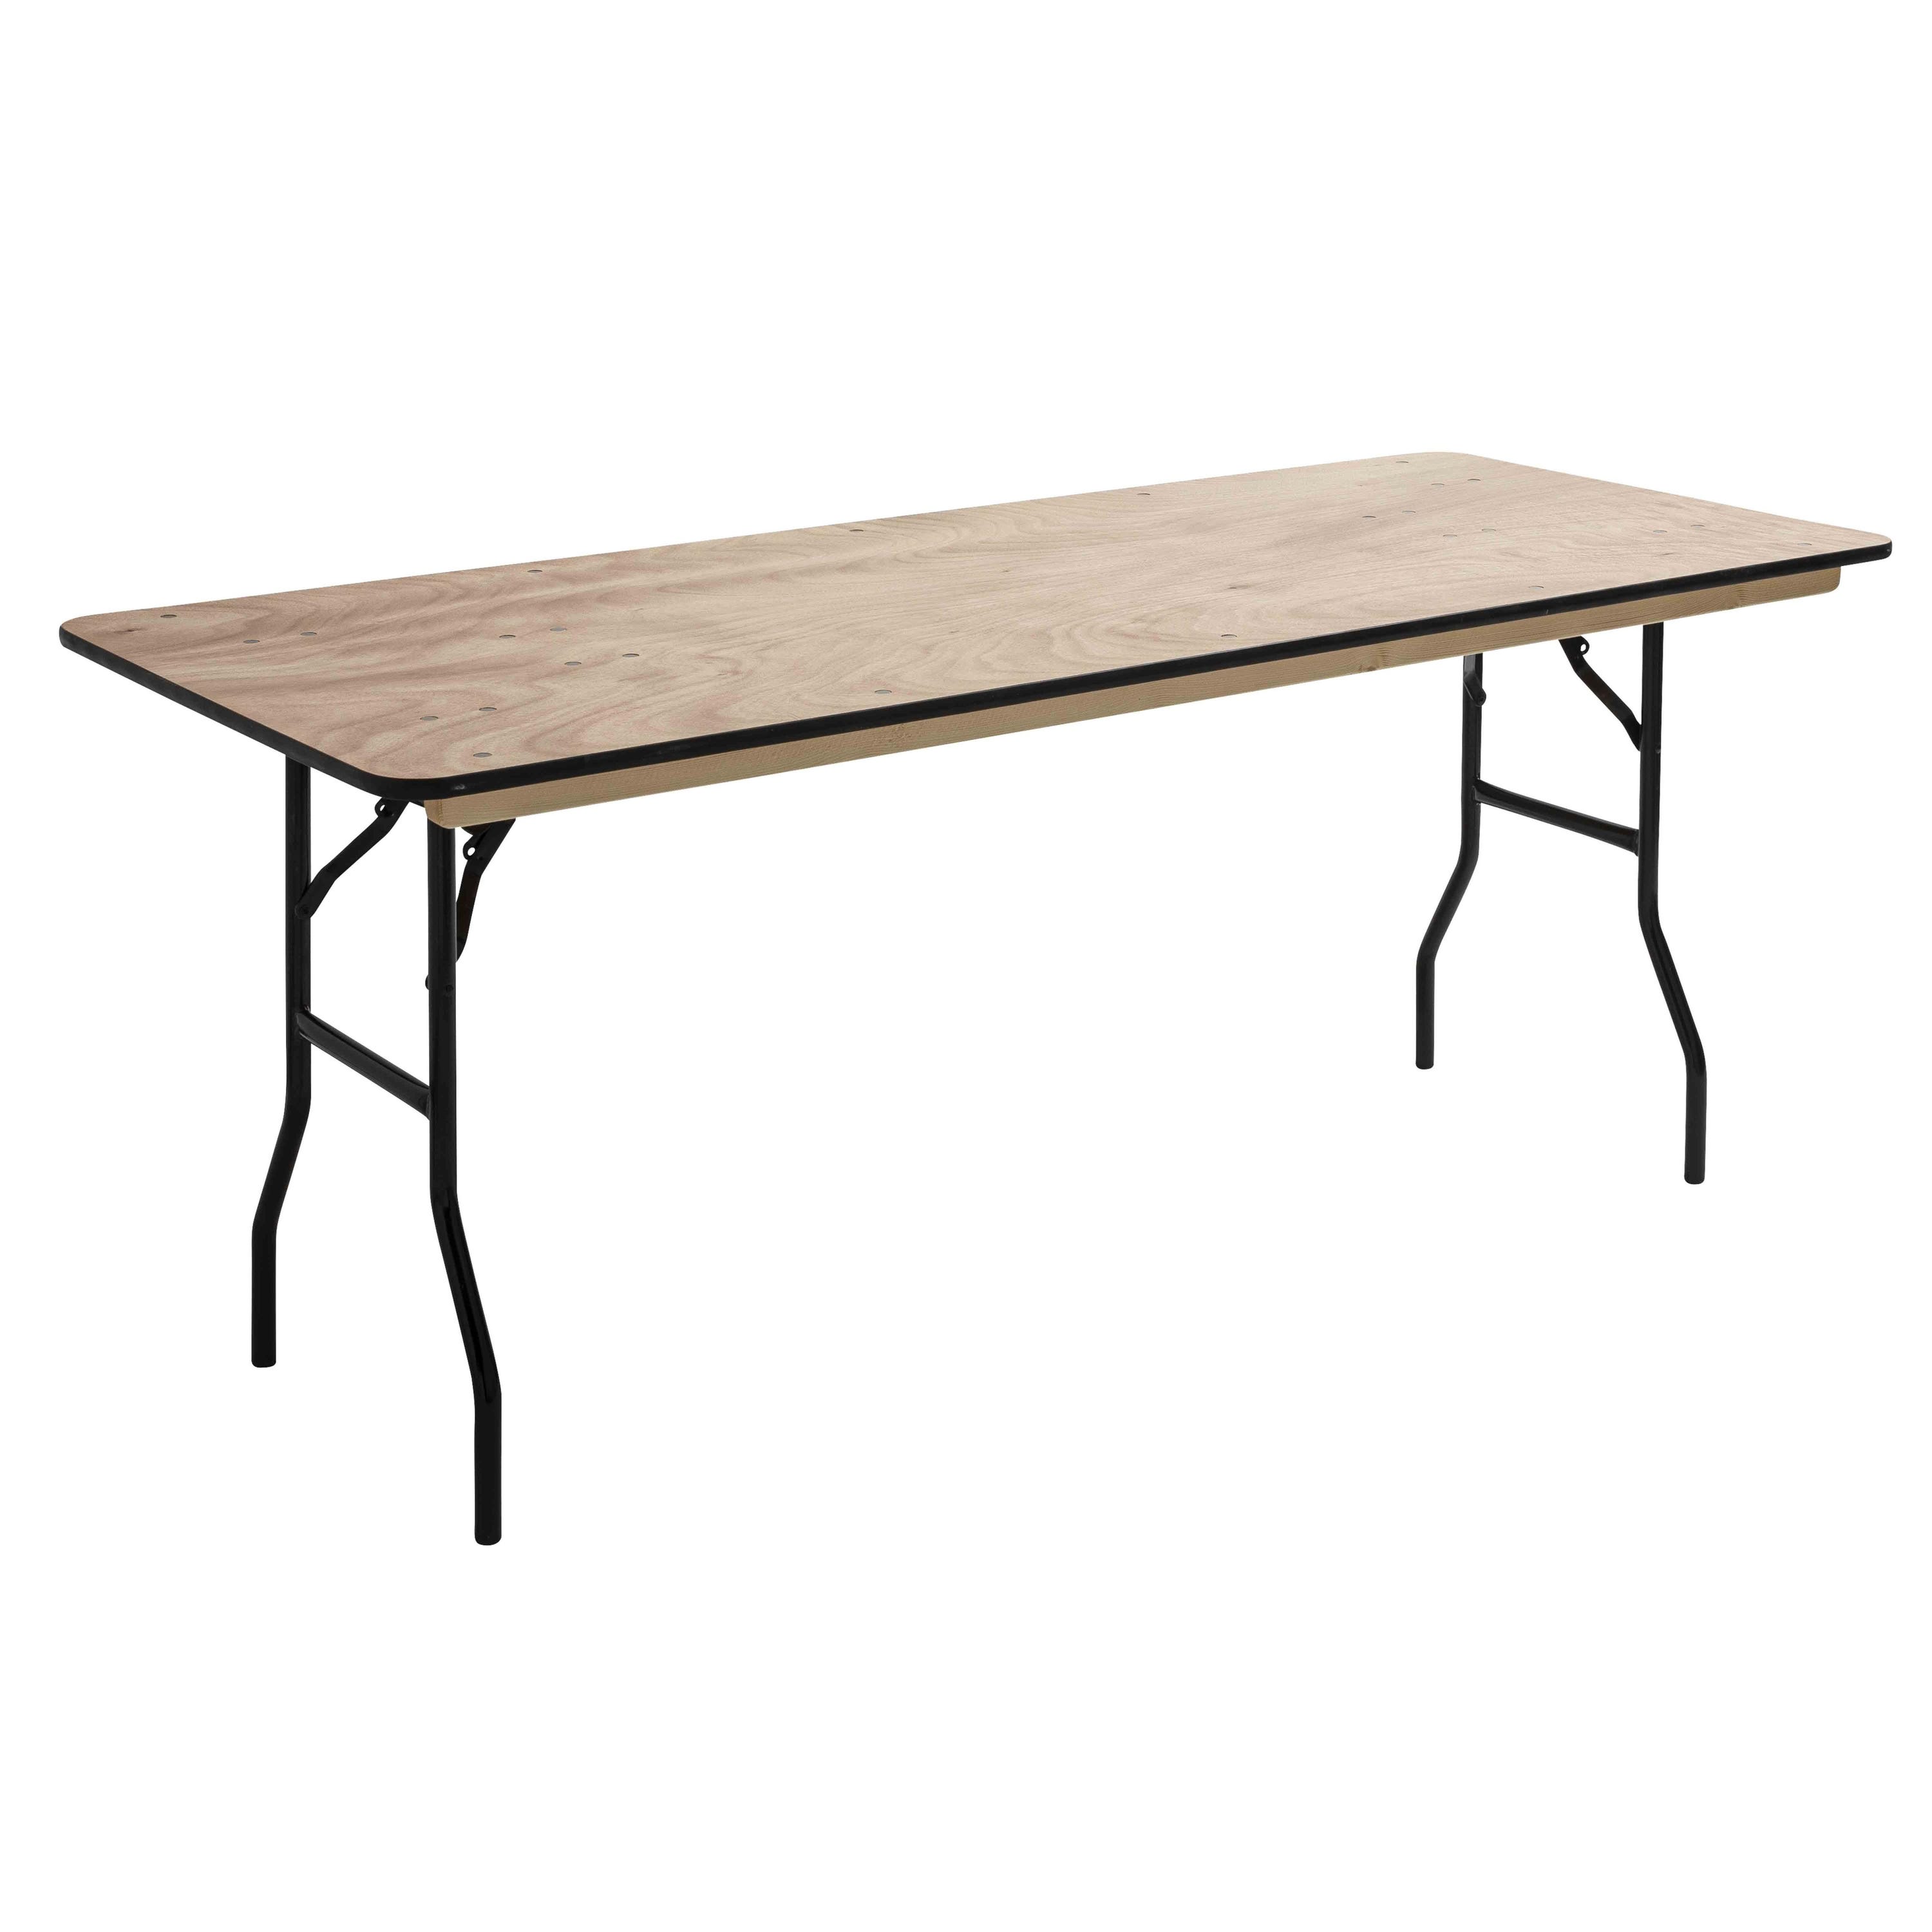 Lote de 5 mesas plegables de madera de 180 cm